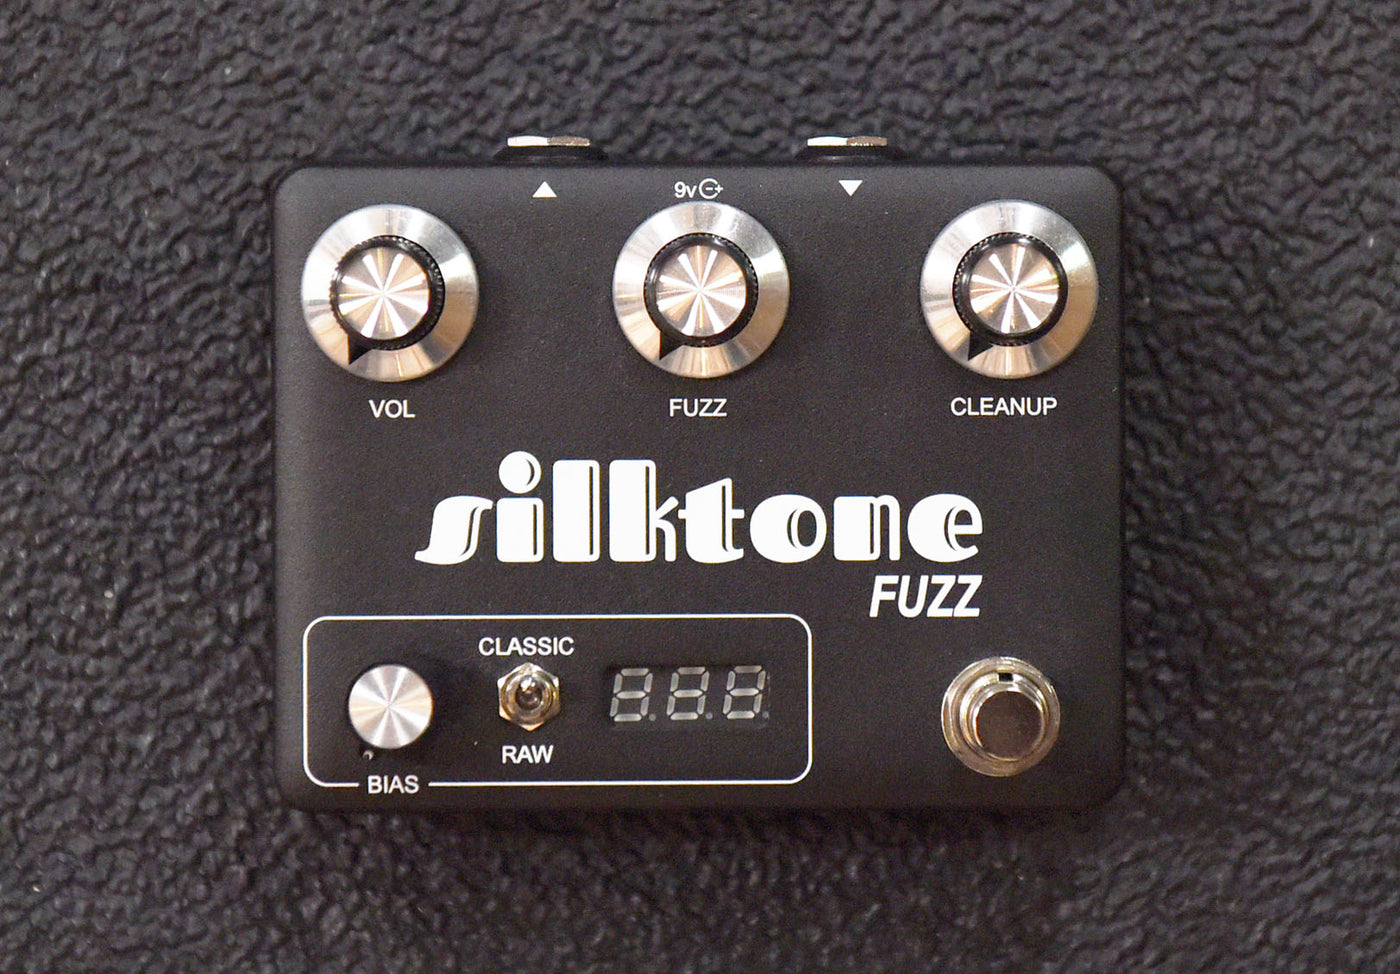 Silktone Fuzz, Recent